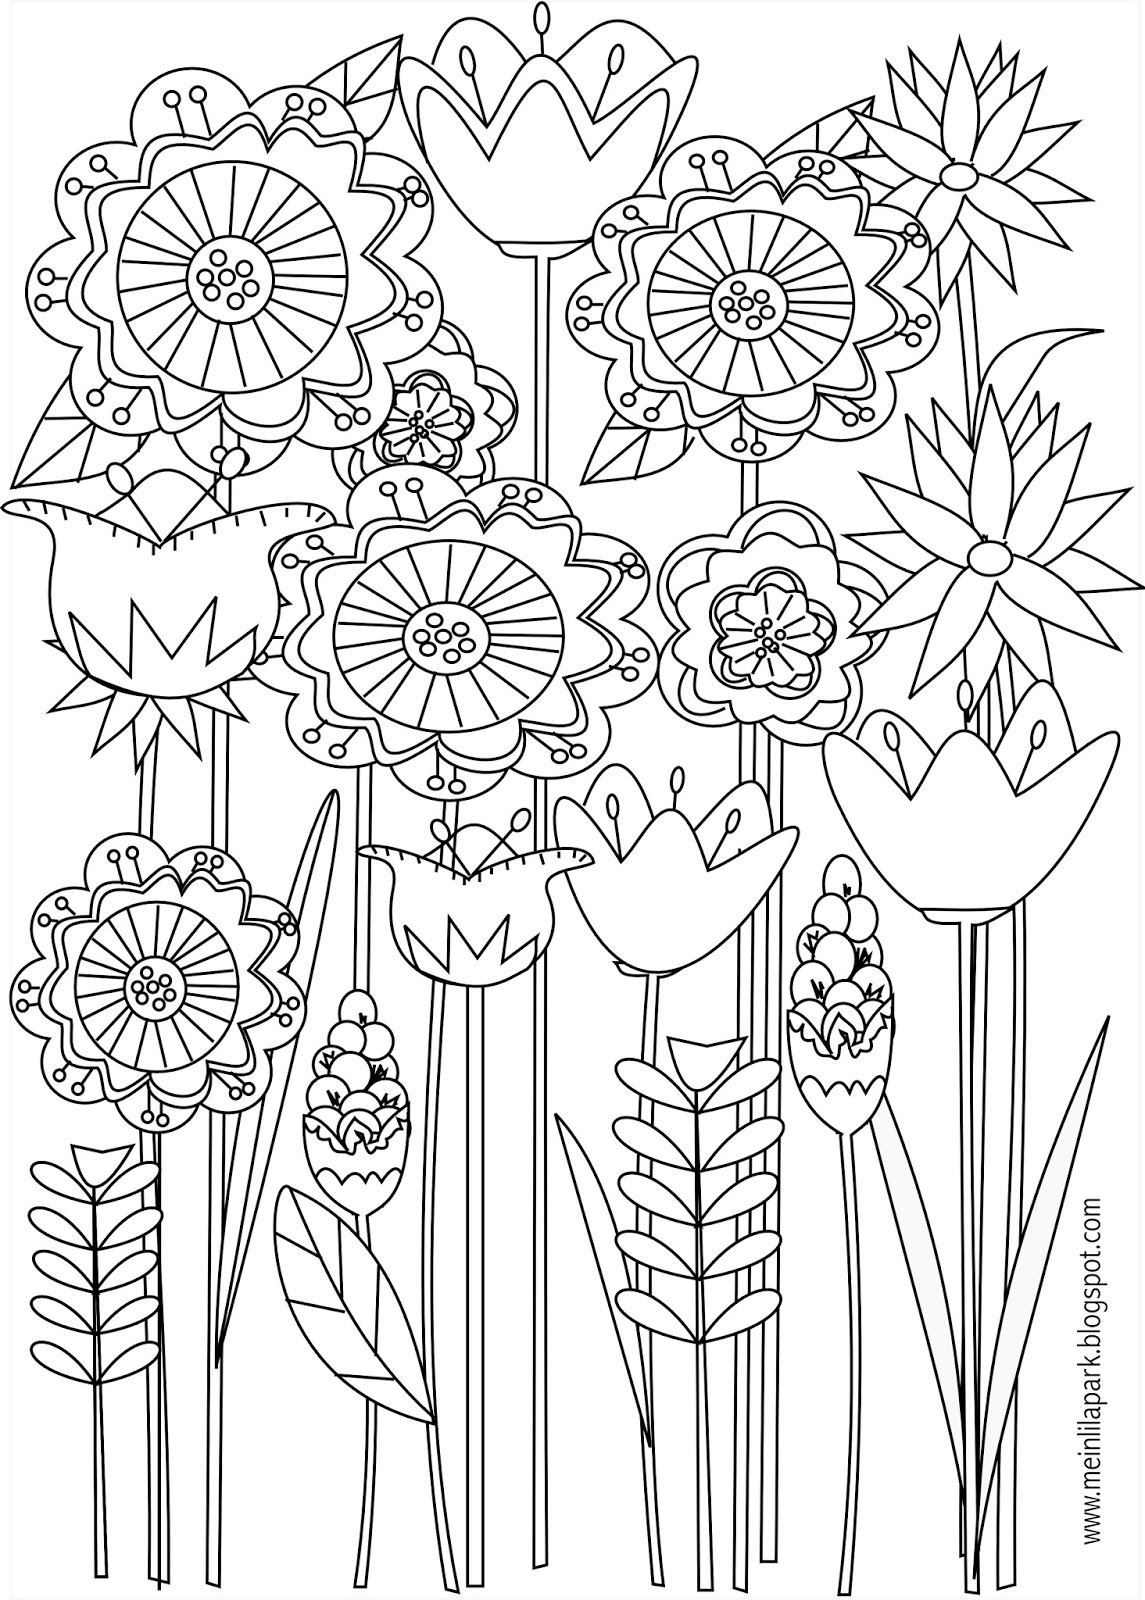 Free Printable Floral Coloring Page Ausdruckbare Malseite Freebie MeinLilaPark